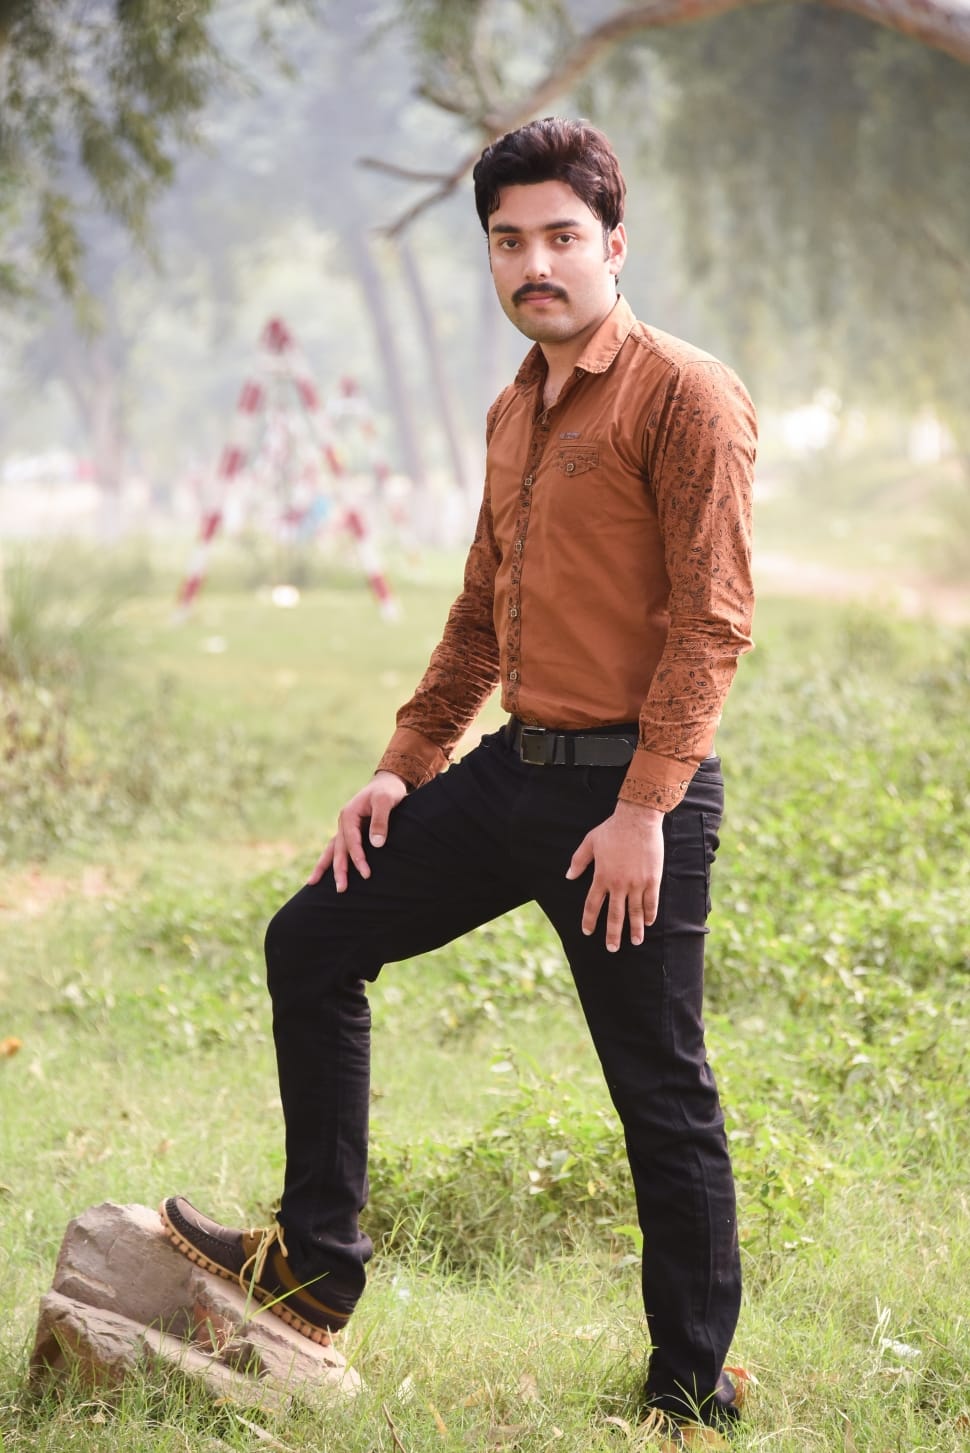 Man in brown dress shirt and black pants standing under tree during daytime  photo  Free Uttar pradesh Image on Unsplash